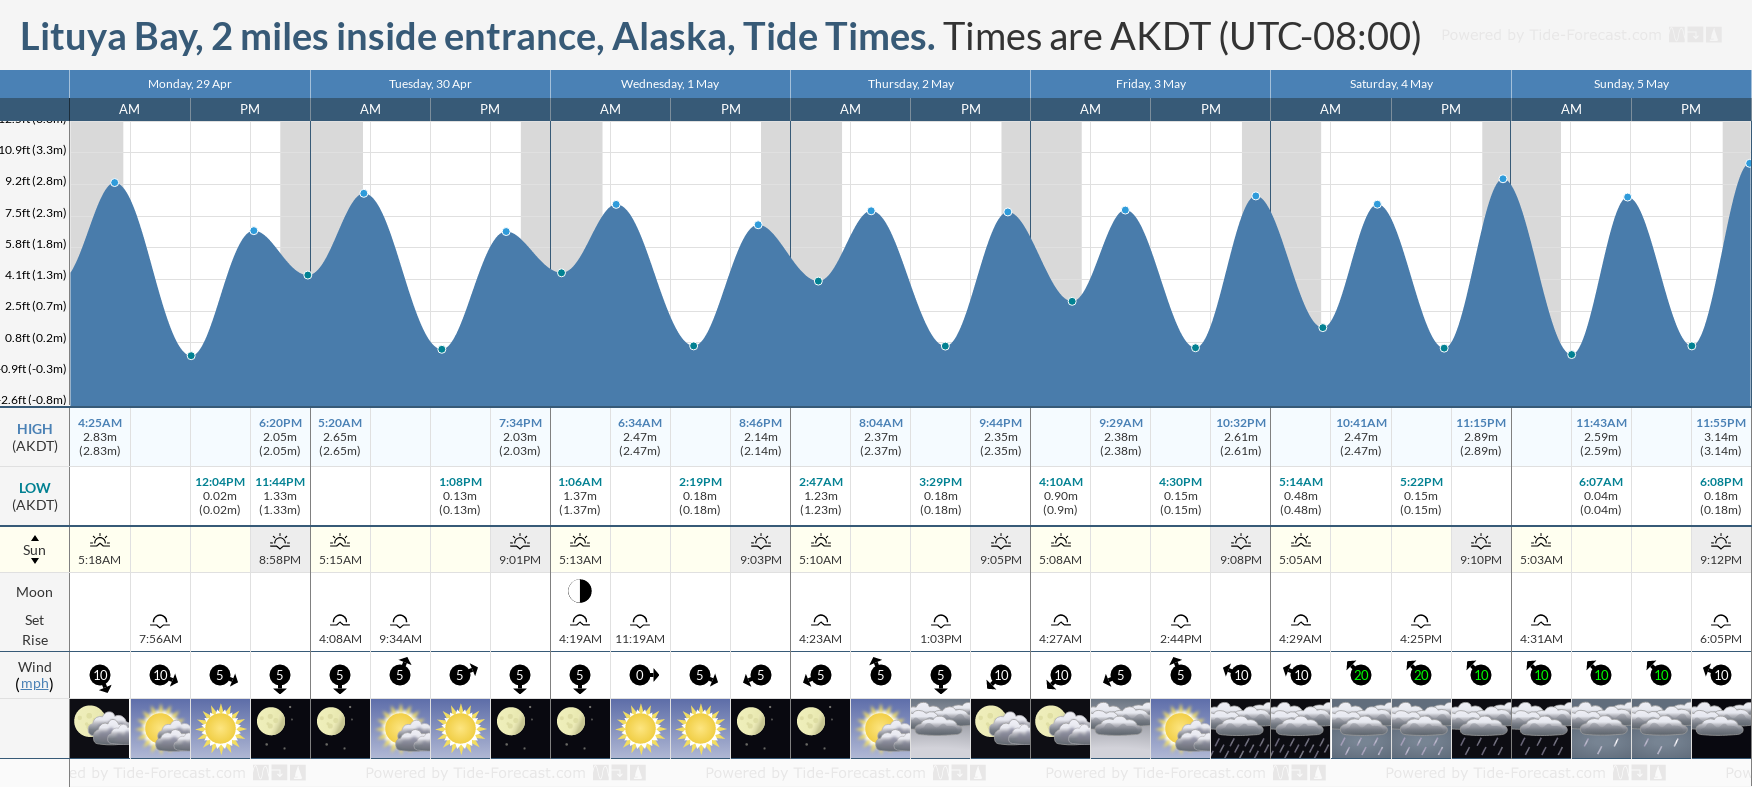 Lituya Bay, 2 miles inside entrance, Alaska Tide Chart including high and low tide tide times for the next 7 days